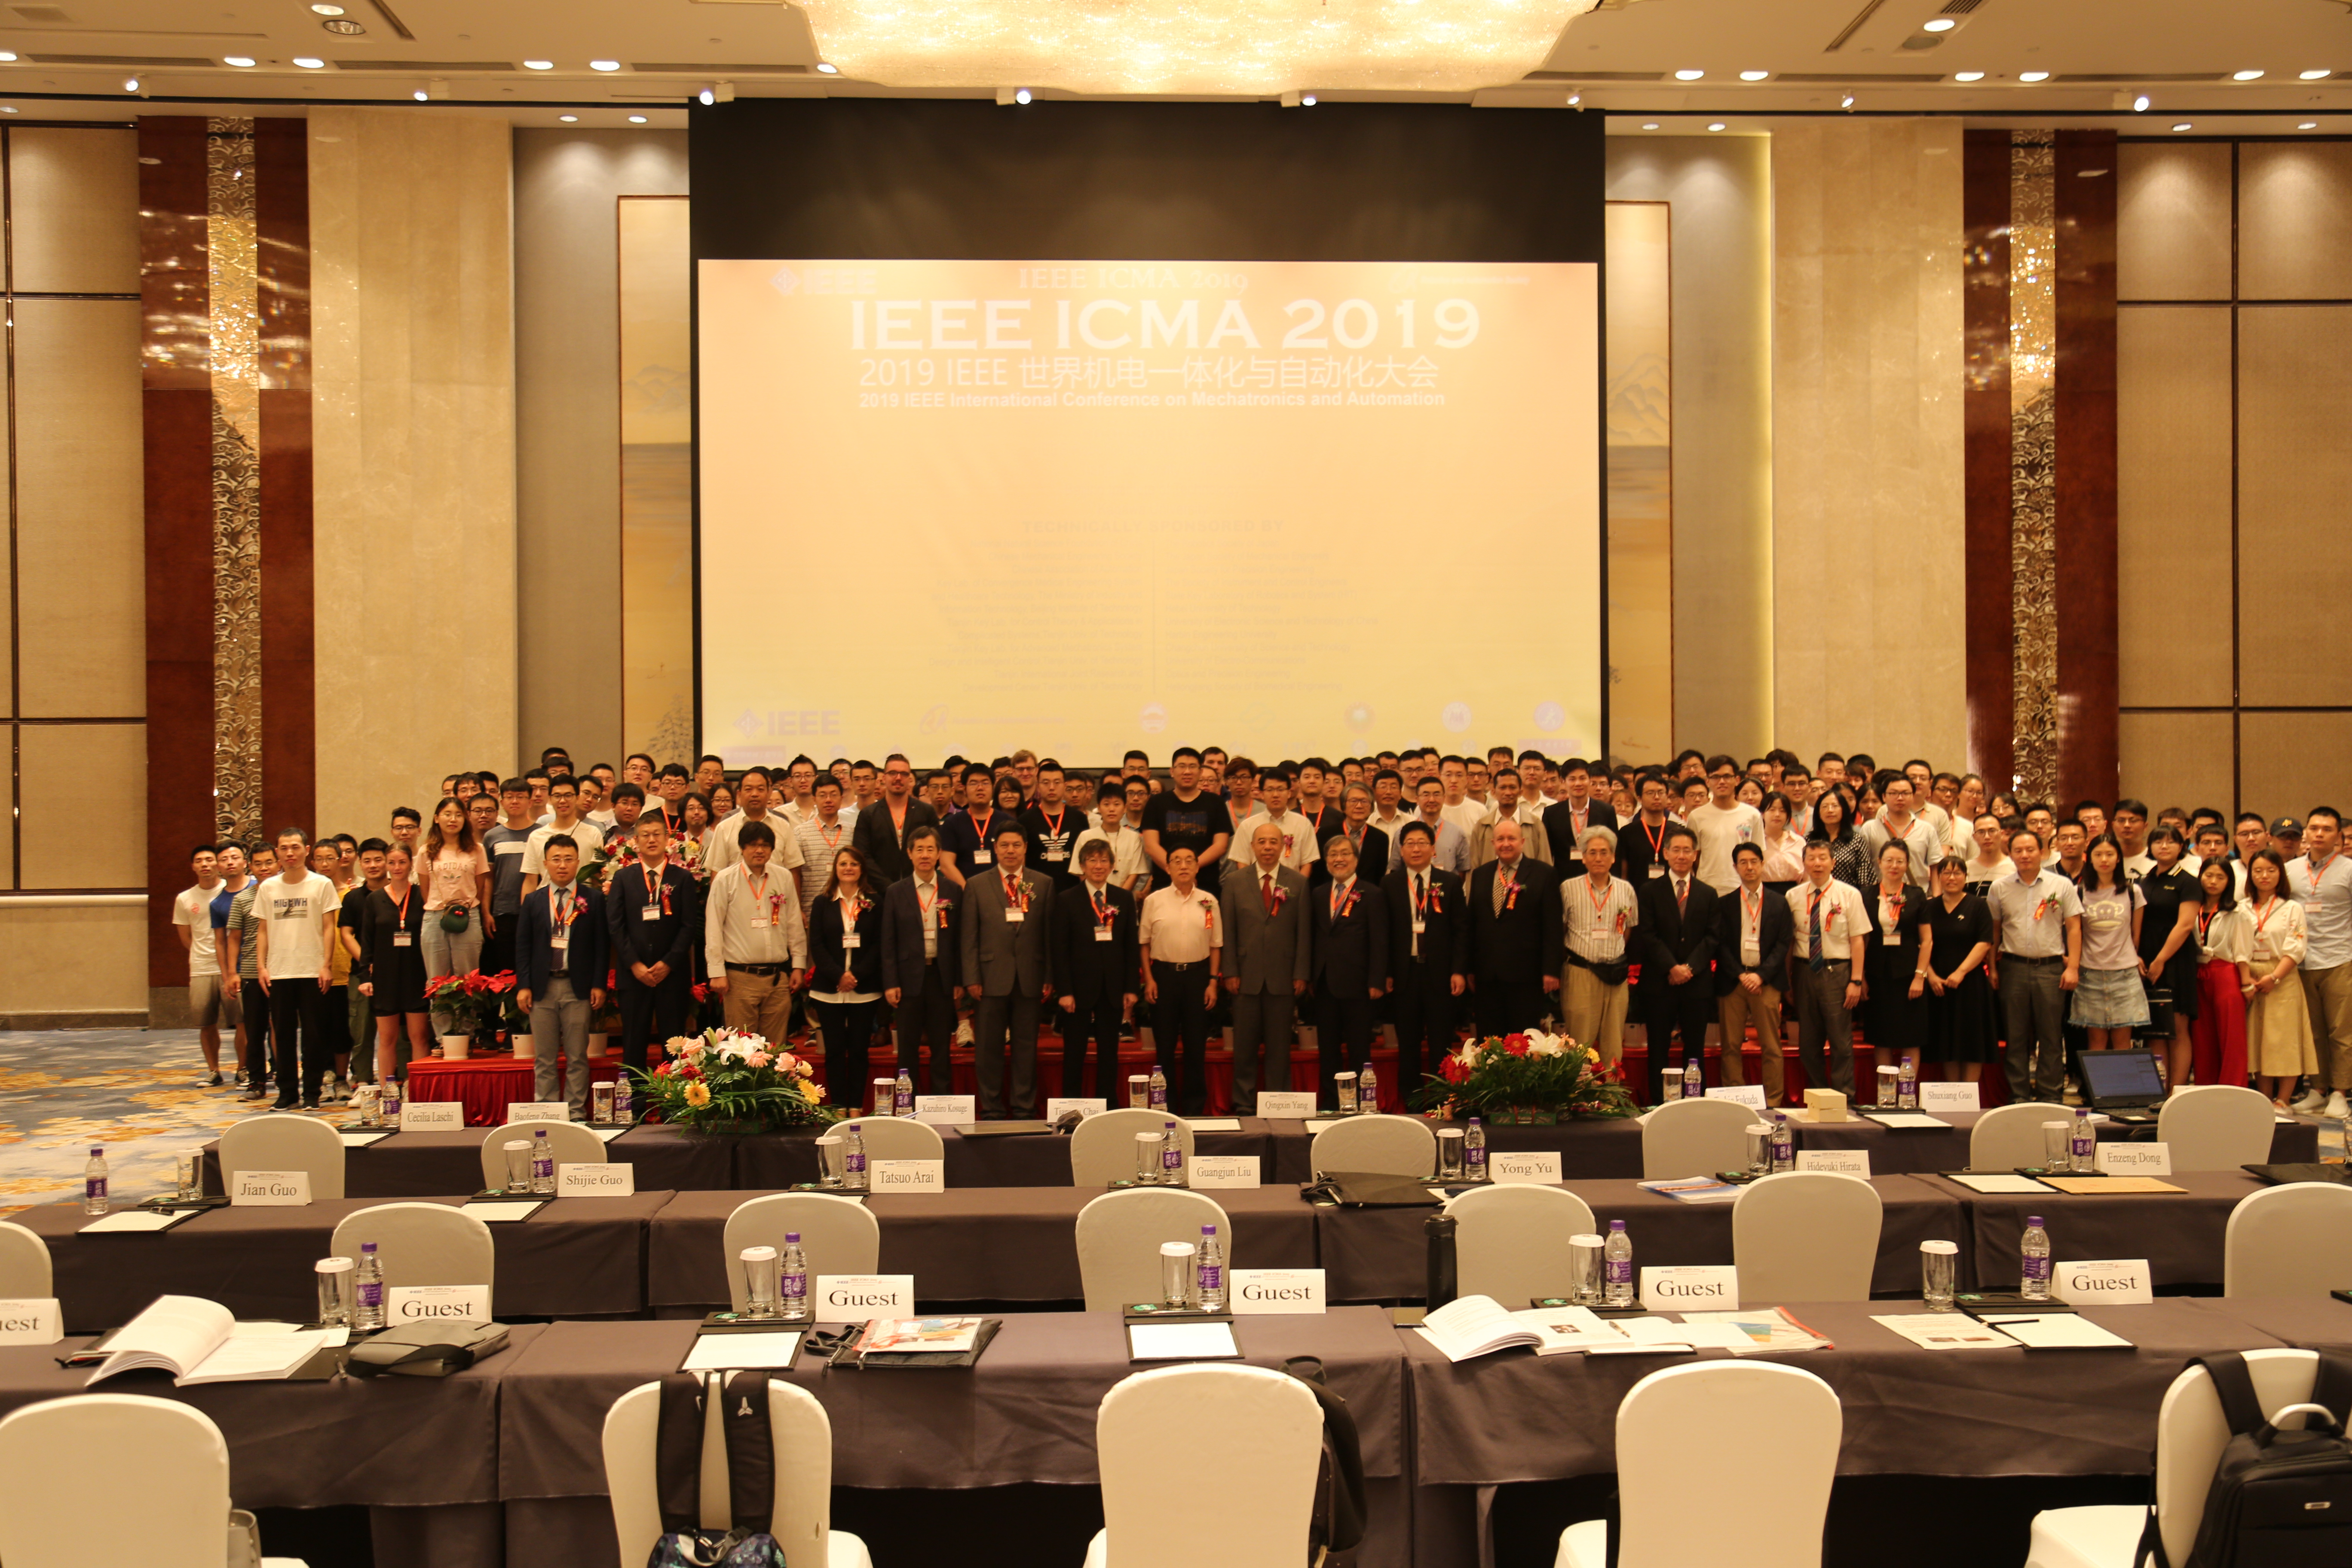 IEEE ICMA 2019 Conference Opening Ceremony